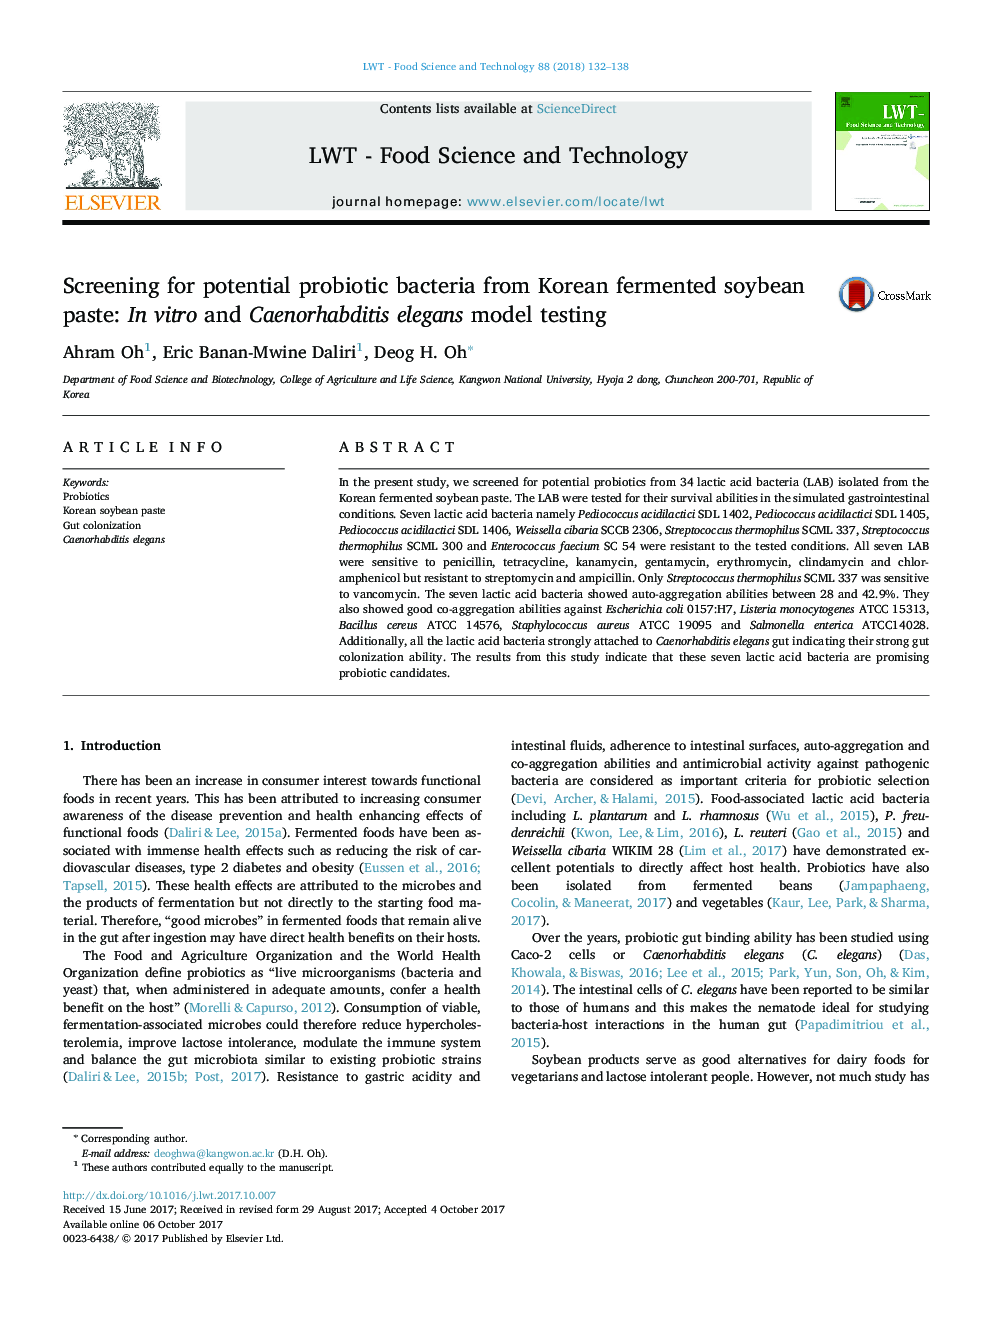 Screening for potential probiotic bacteria from Korean fermented soybean paste: In vitro and Caenorhabditis elegans model testing